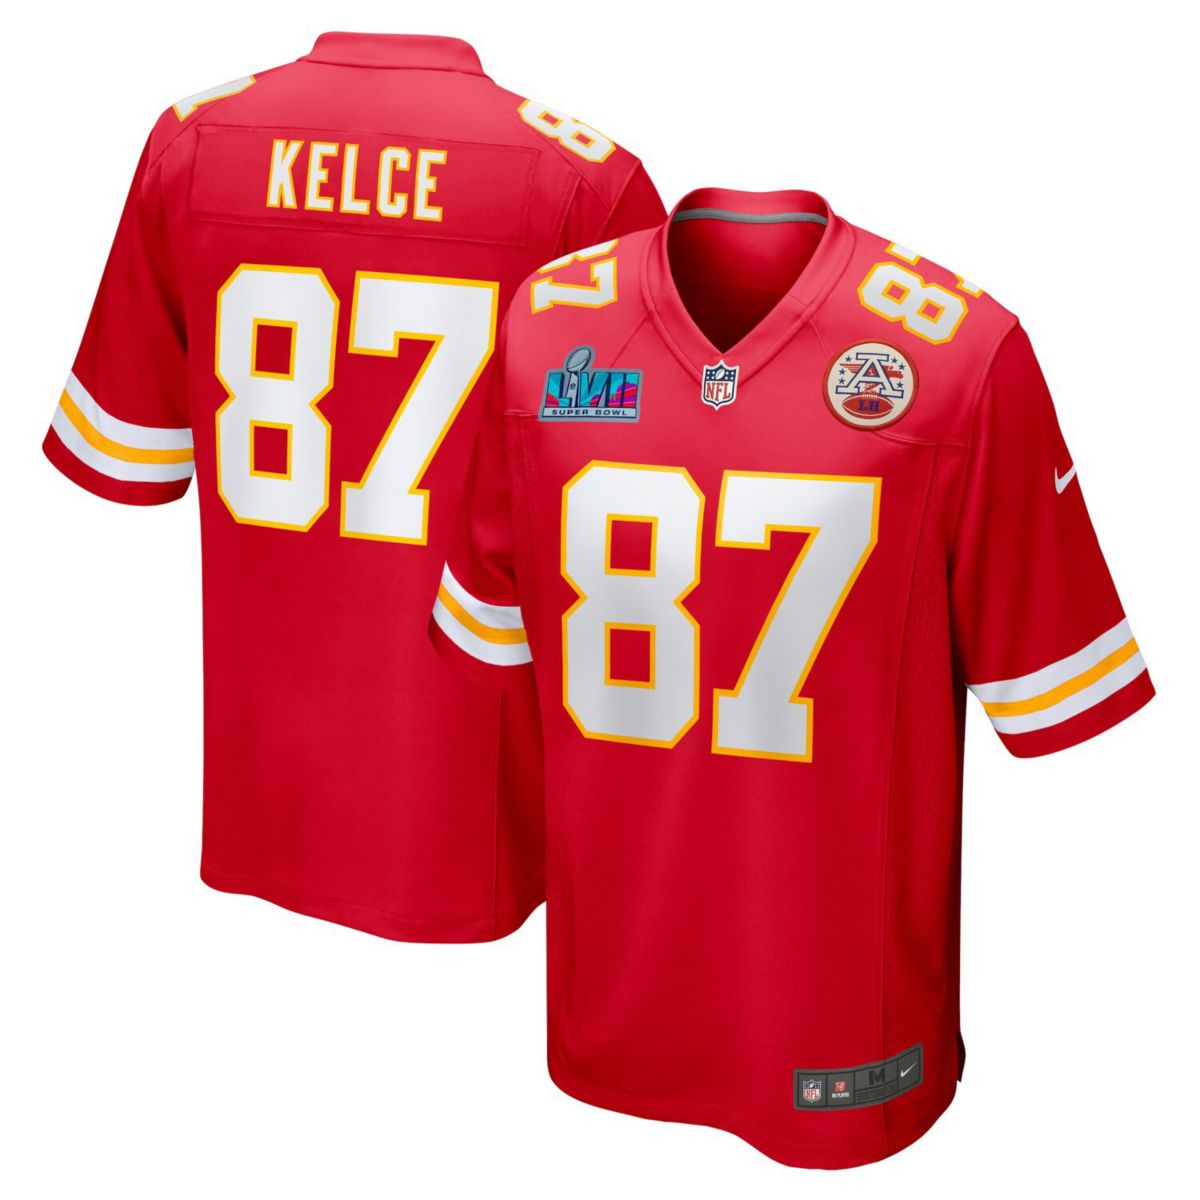 Мужское джерси Nike Travis Kelce Red Kansas City Chiefs Super Bowl LVII (сезон 2022) с нашивкой для игры Nitro USA